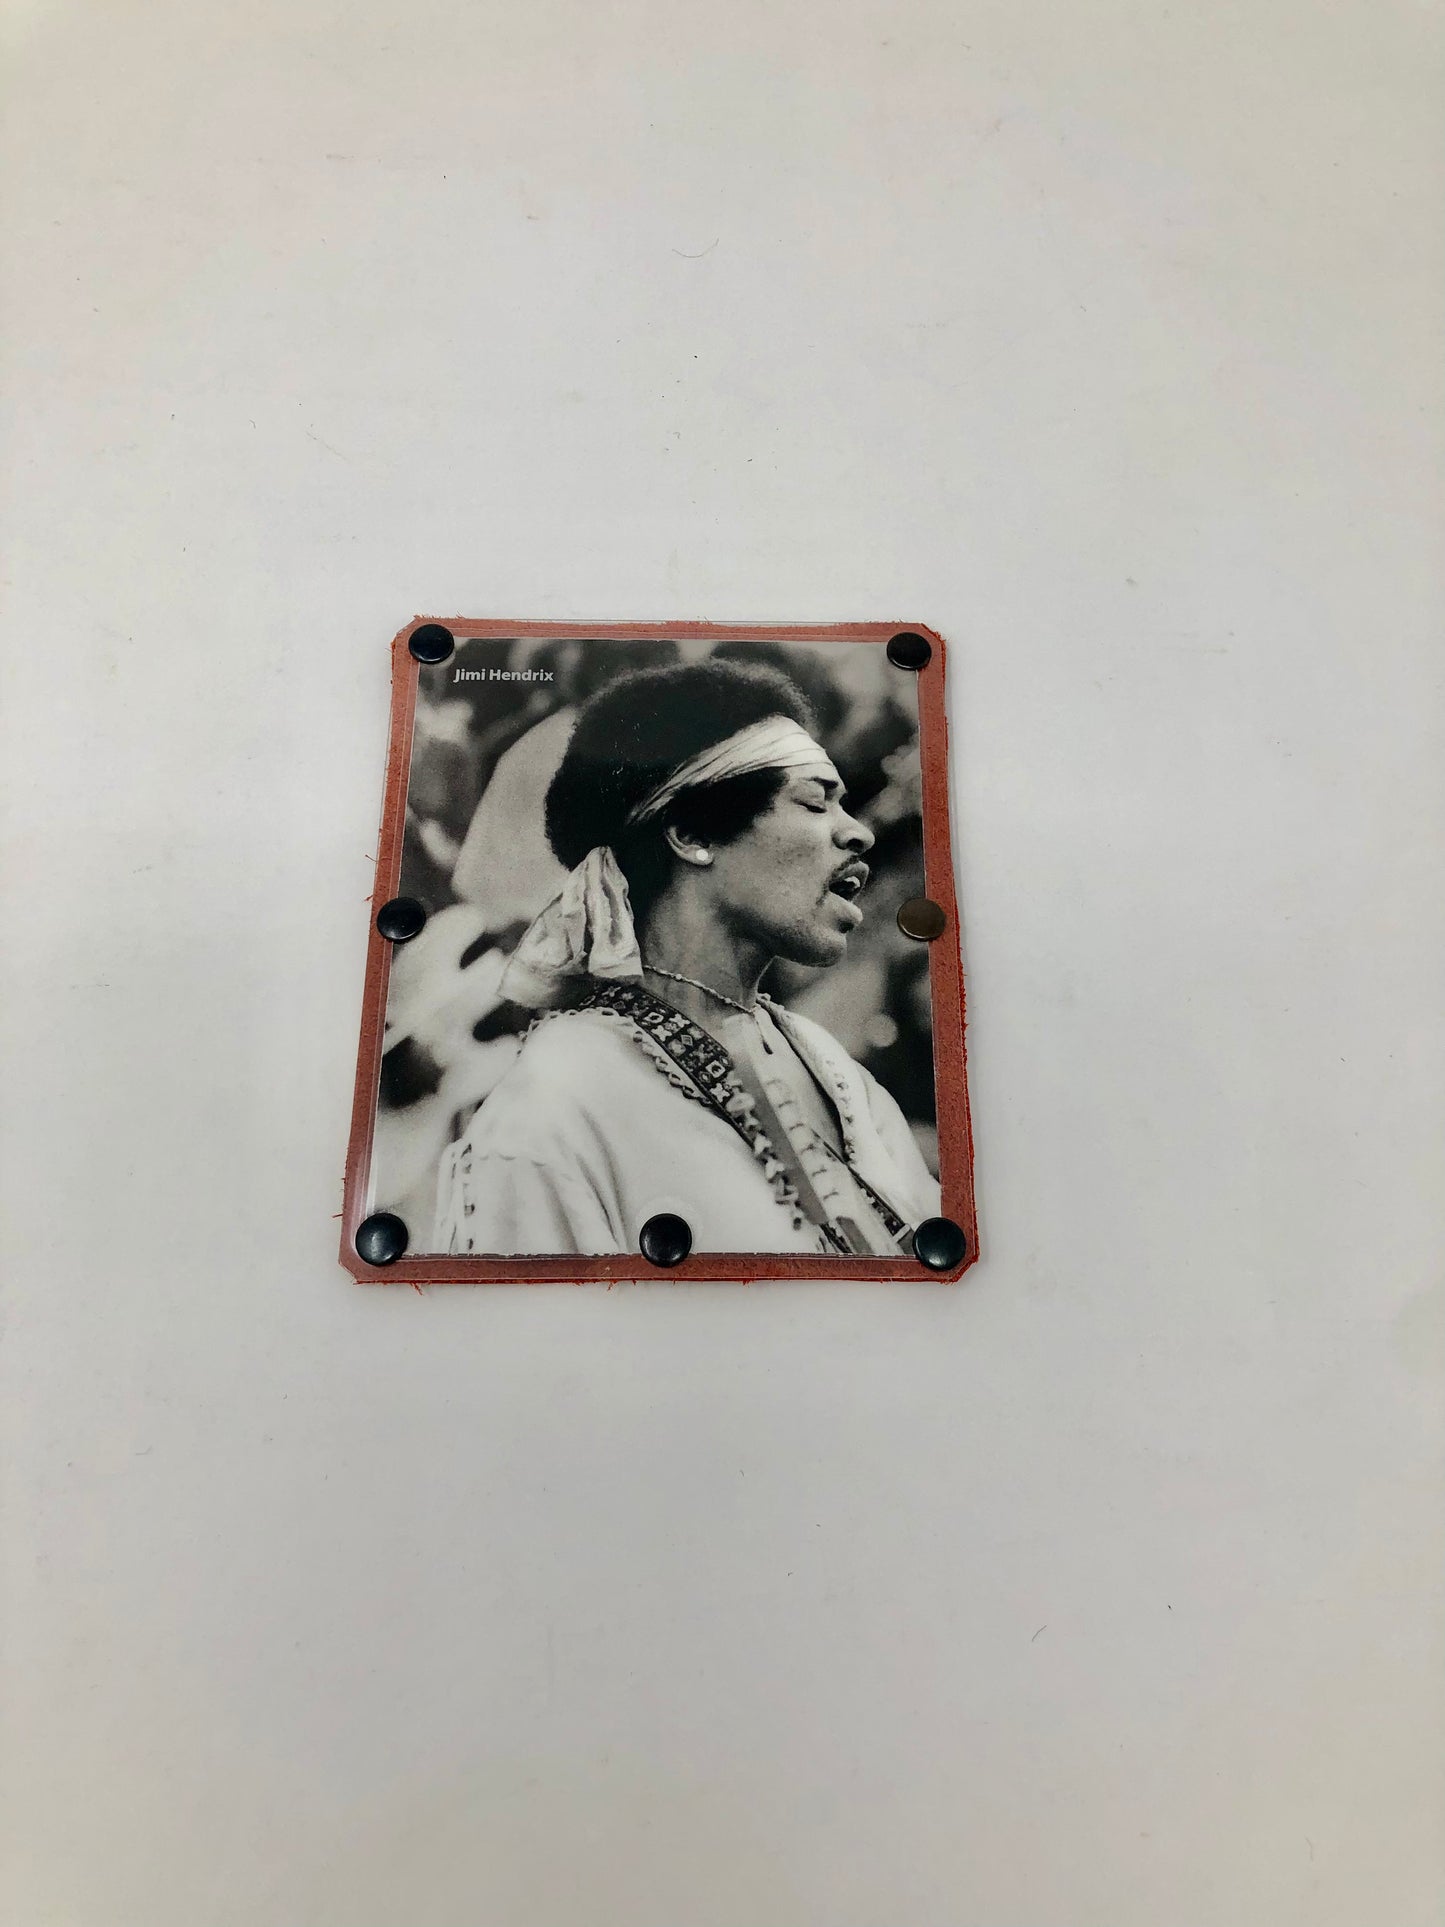 Vintage Graphics Card Wallet - Woodstock Jimi Hendrix